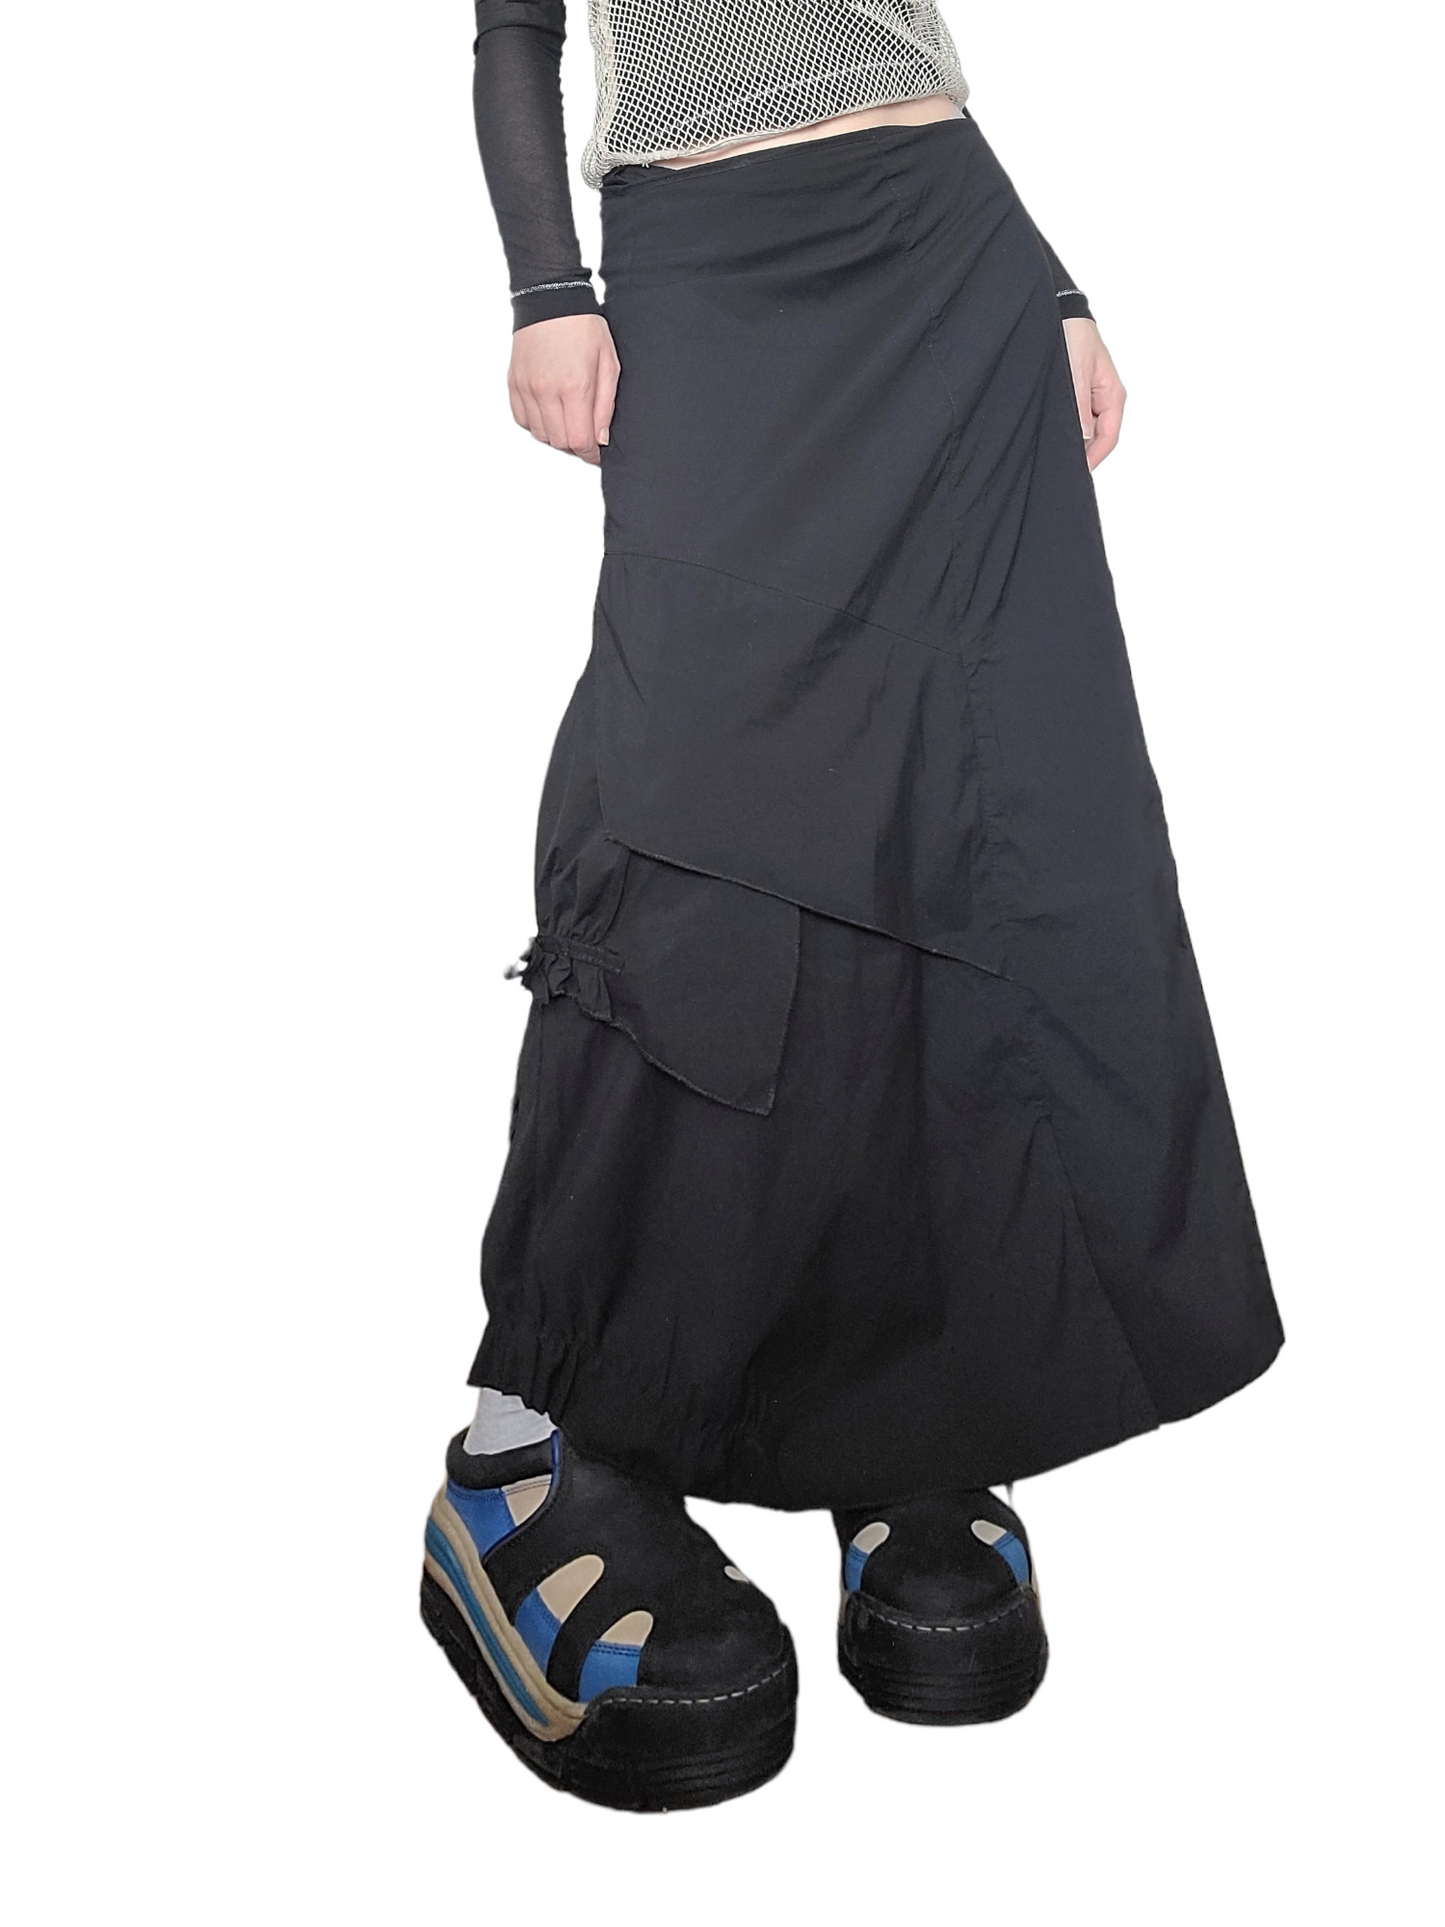 Maxi skirt gorpcore parachute techwear subversive basics dystopian post apo futuristic rave cybery2k archive fashion harajuku